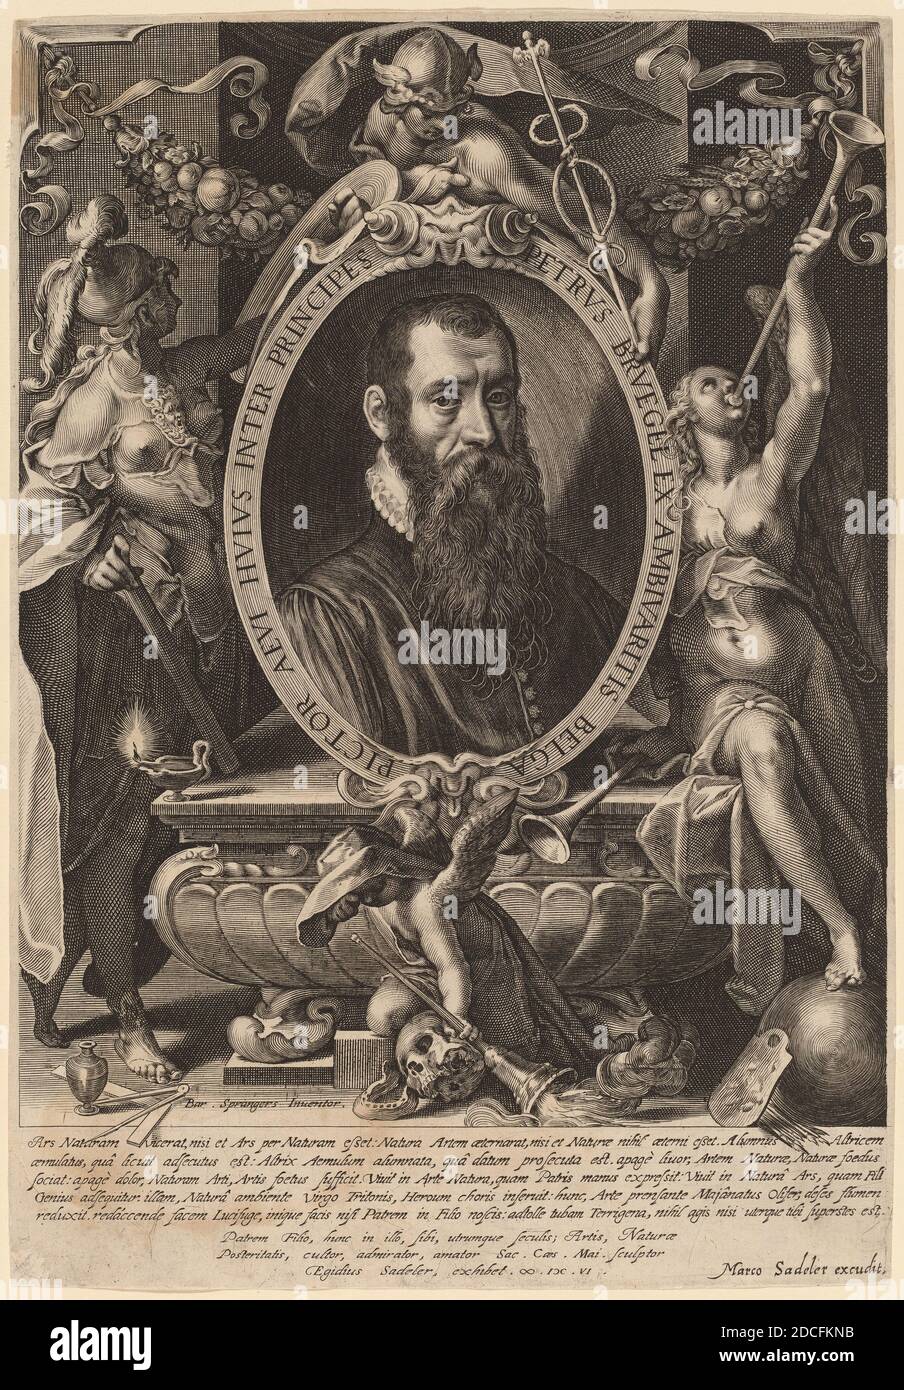 Aegidius Sadeler II, (artist), Flemish, c. 1570 - 1629, Bartholomaeus Spranger, (artist after), Flemish, 1546 - 1611, Pieter Brueghel, the Younger, 1606, engraving Stock Photo